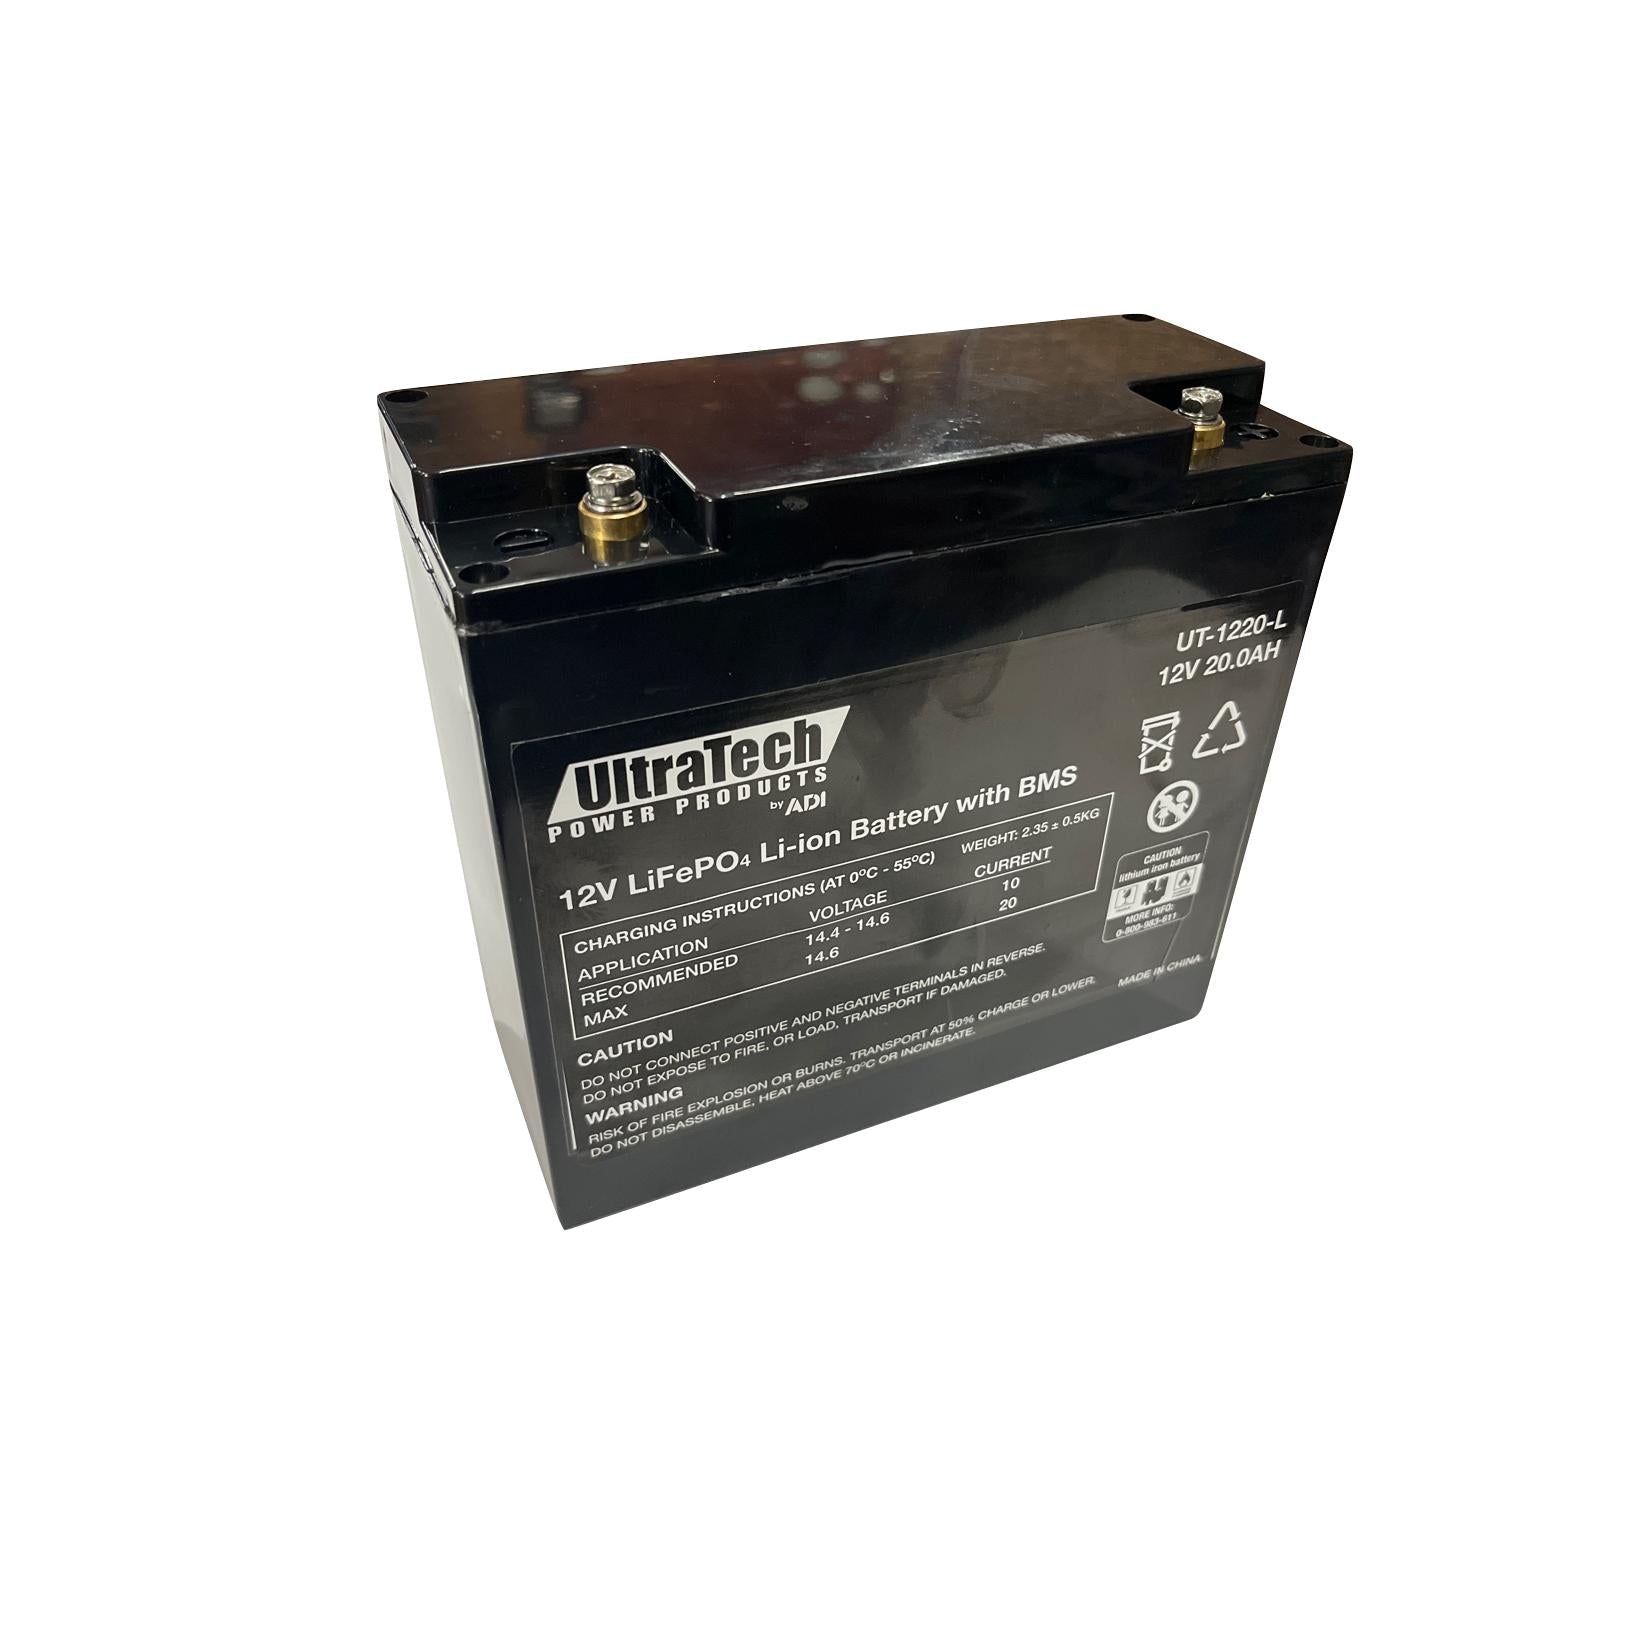 Battery 12𝑉 Li-Ion LiFePO₄ 20𝐴𝒉/240𝑊 (Geni Size) Vestwoods-Batteries-Vestwoods-diyshop.co.za